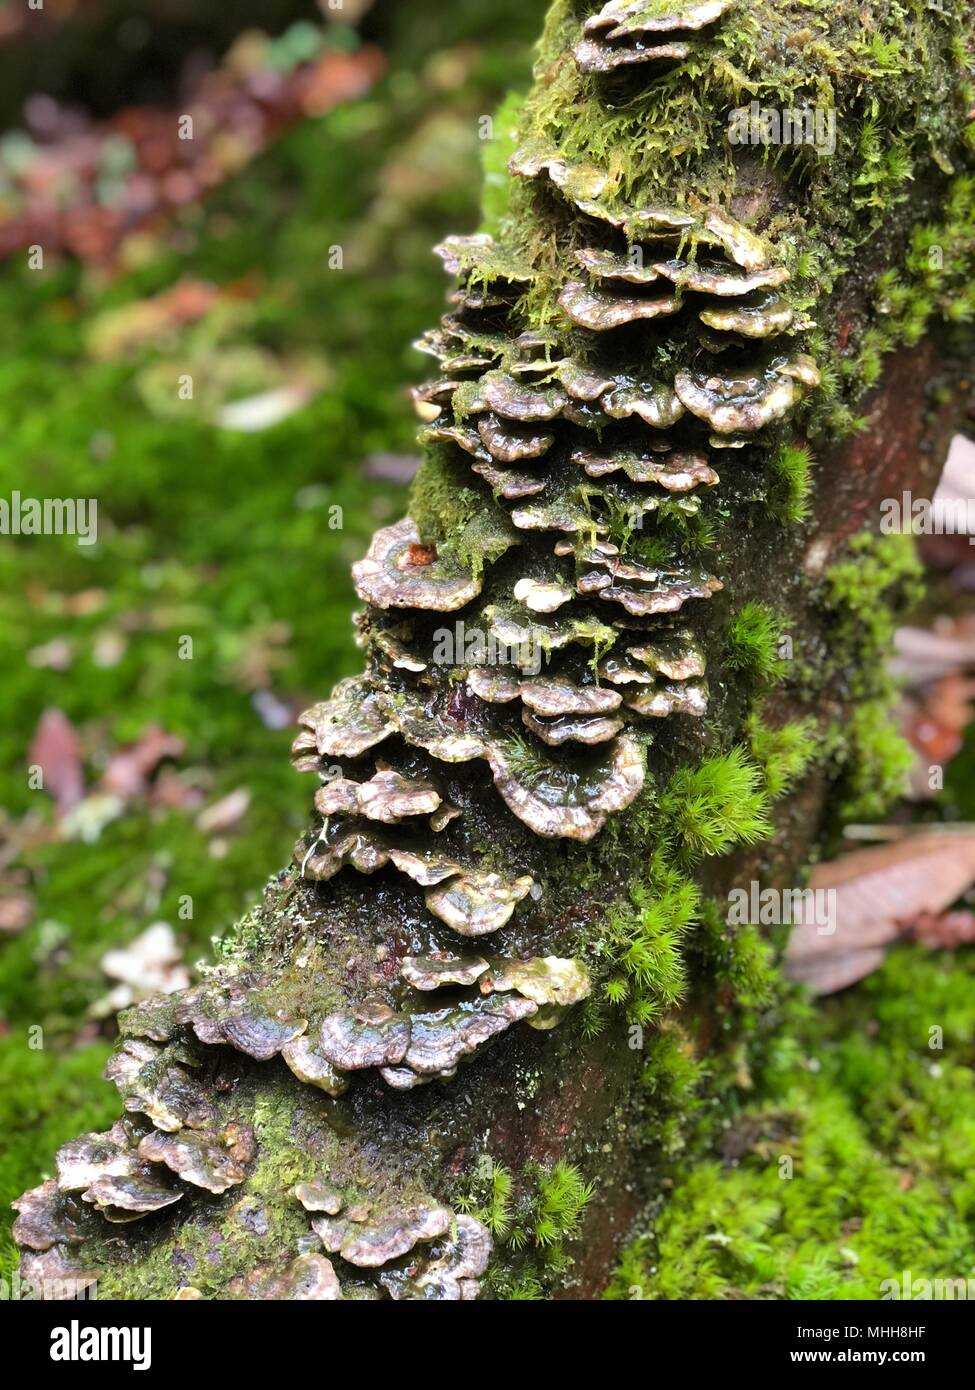 Tree Fungi Growing on Woodland Tree Stump Stock Photo